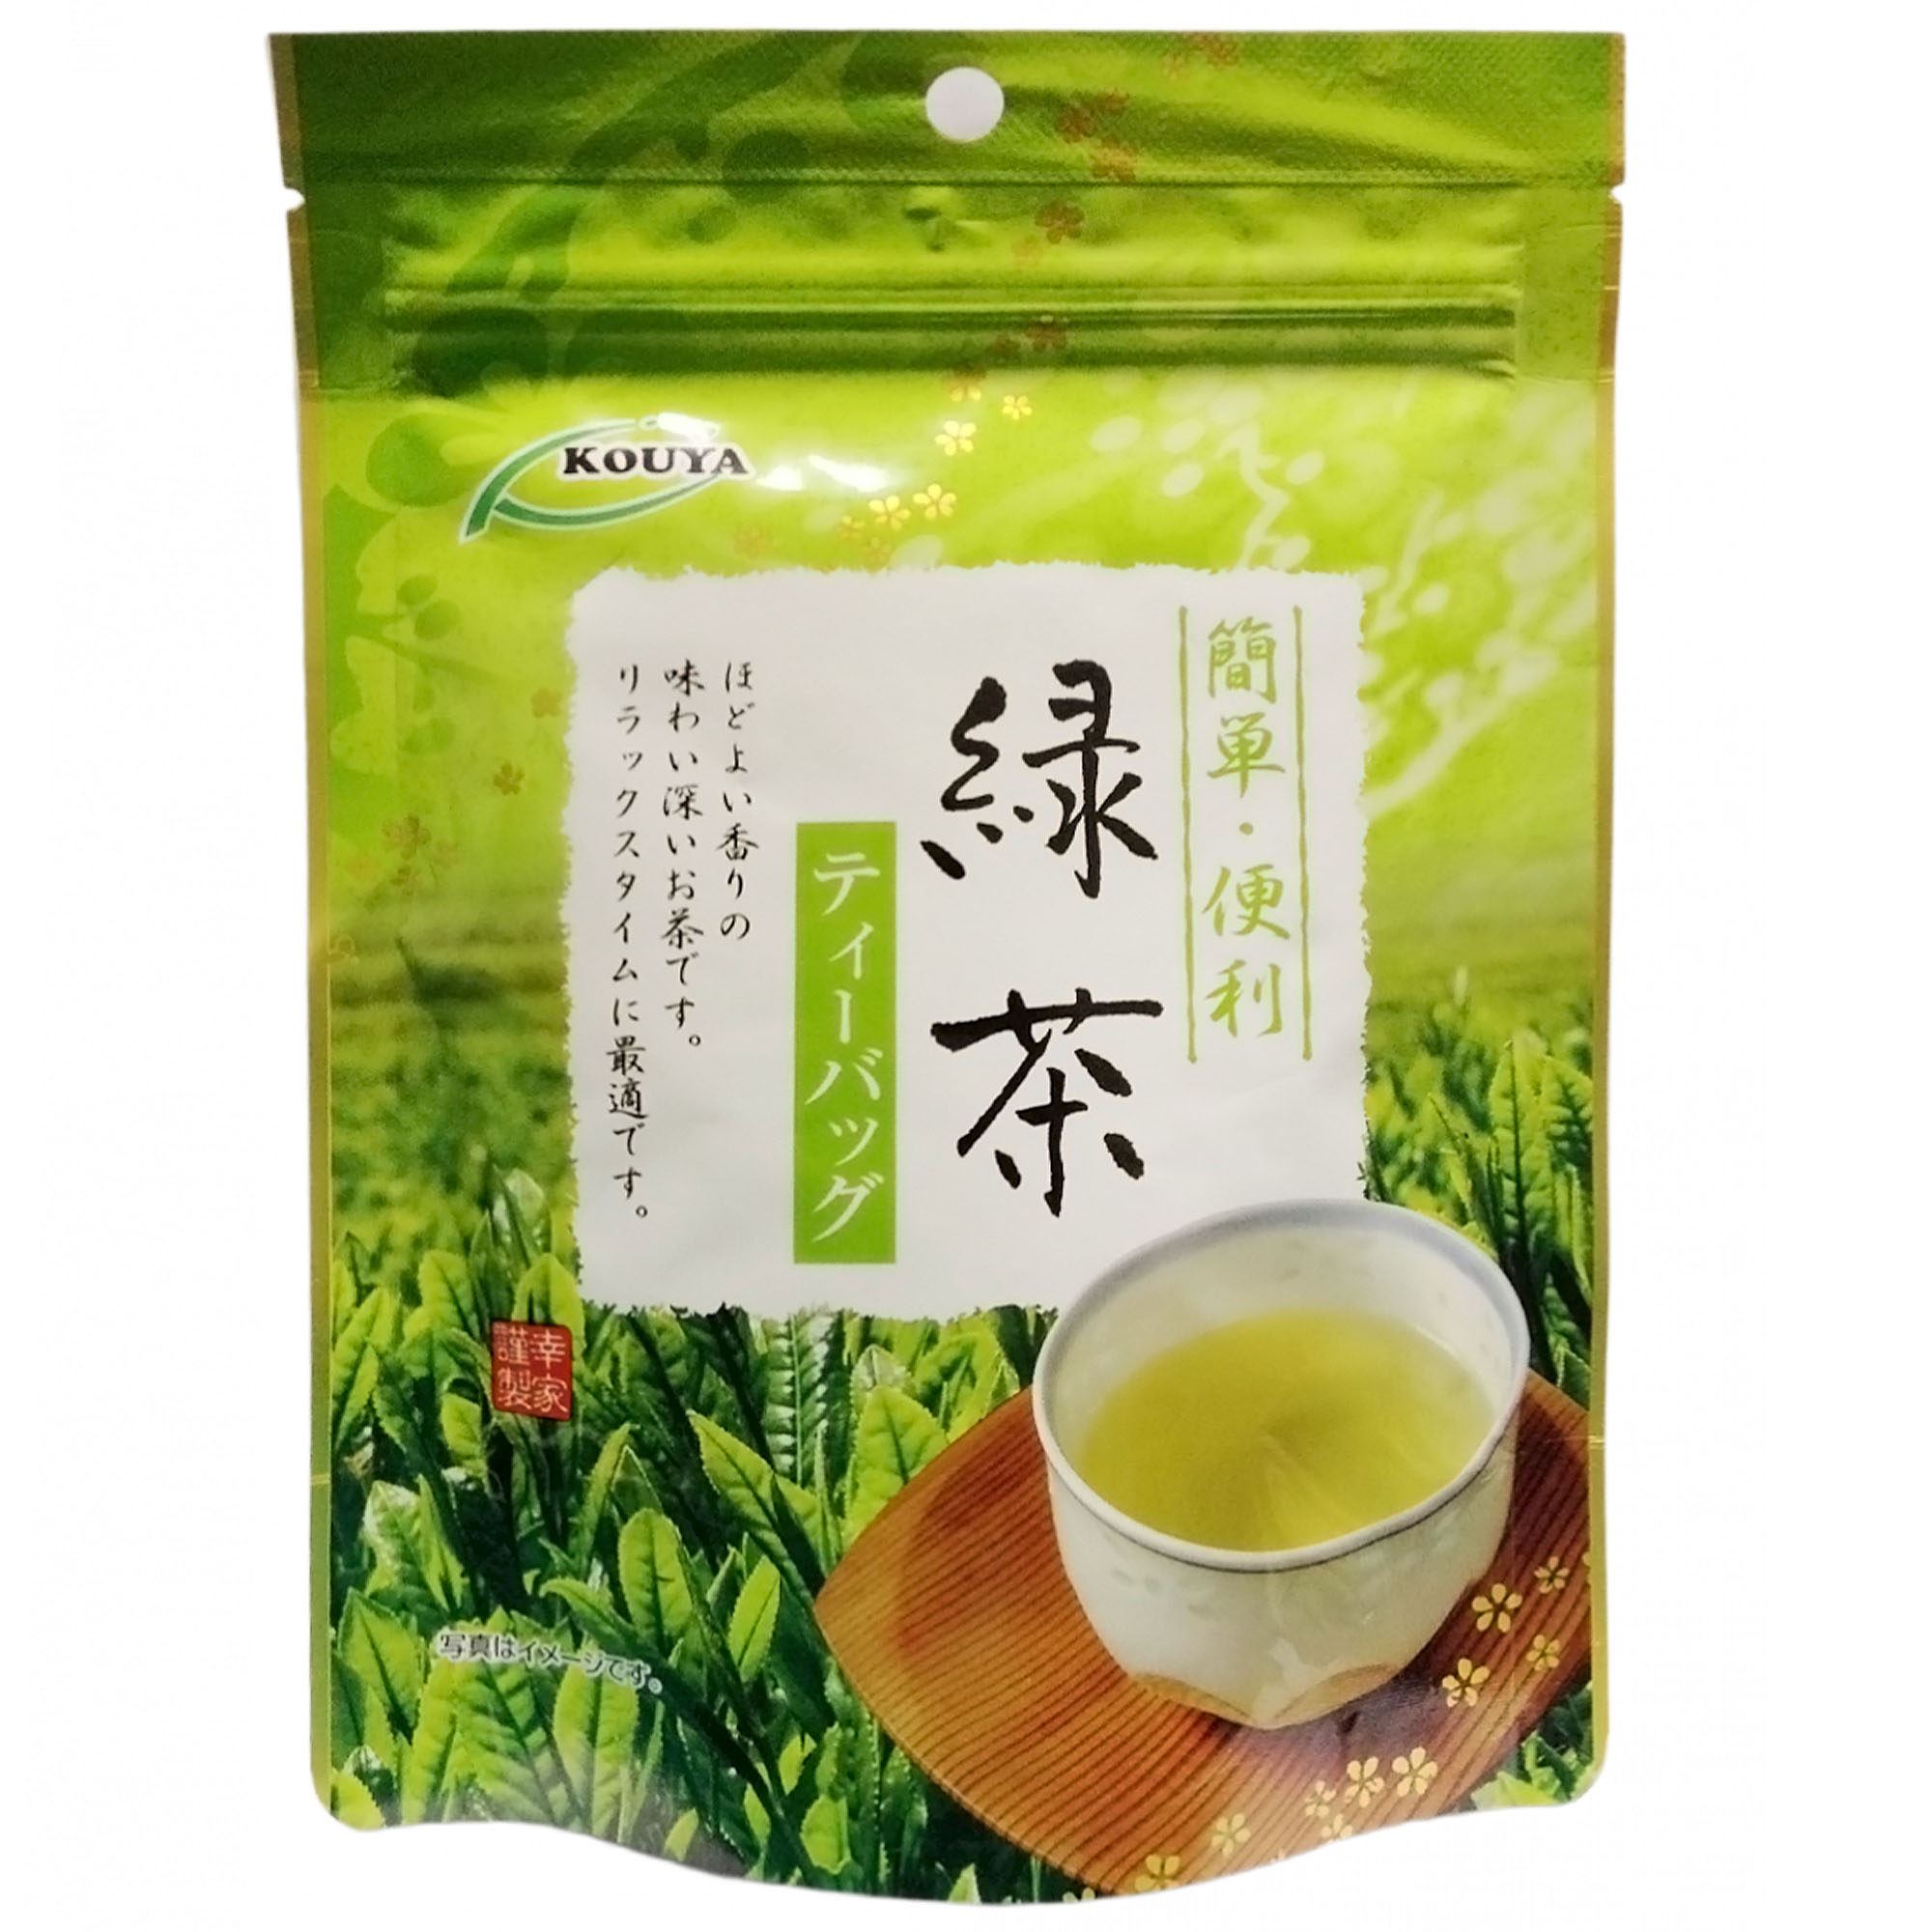 Японский зеленый чай Kouya РЁКУ-ча (15 шт), 30 г японский зеленый чай kouya рёку ча 15 шт 30 г